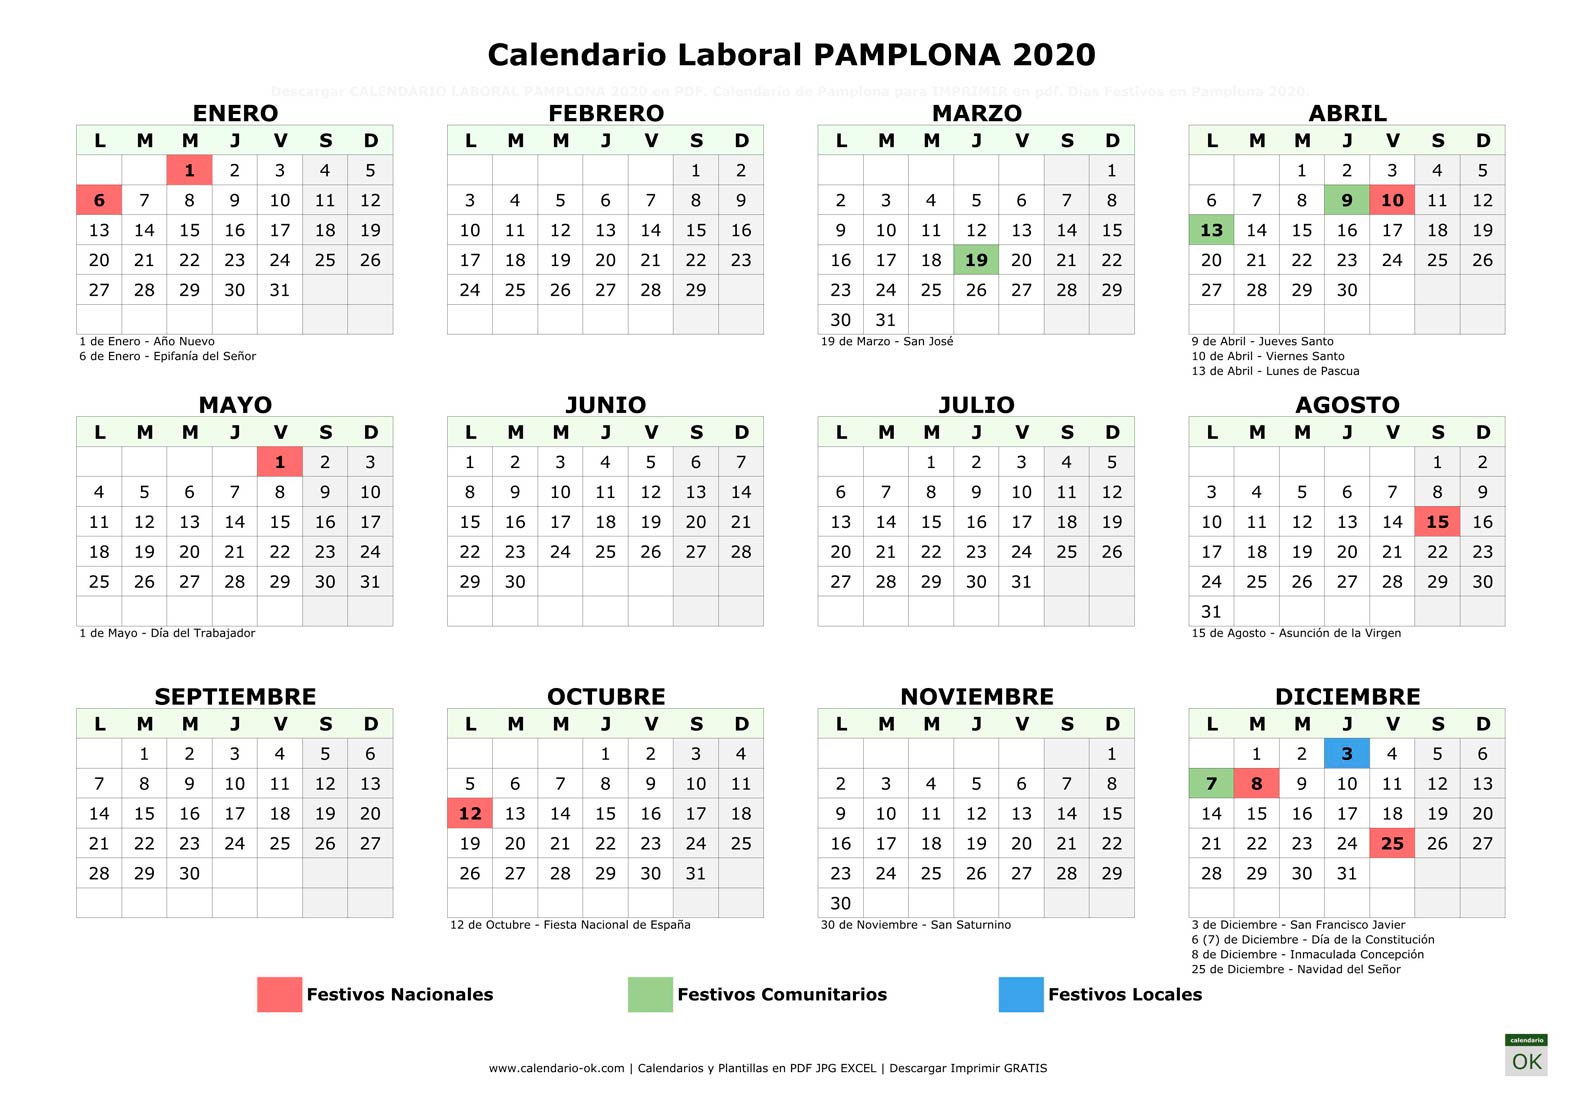 Calendario Laboral PAMPLONA 2020 horizontal